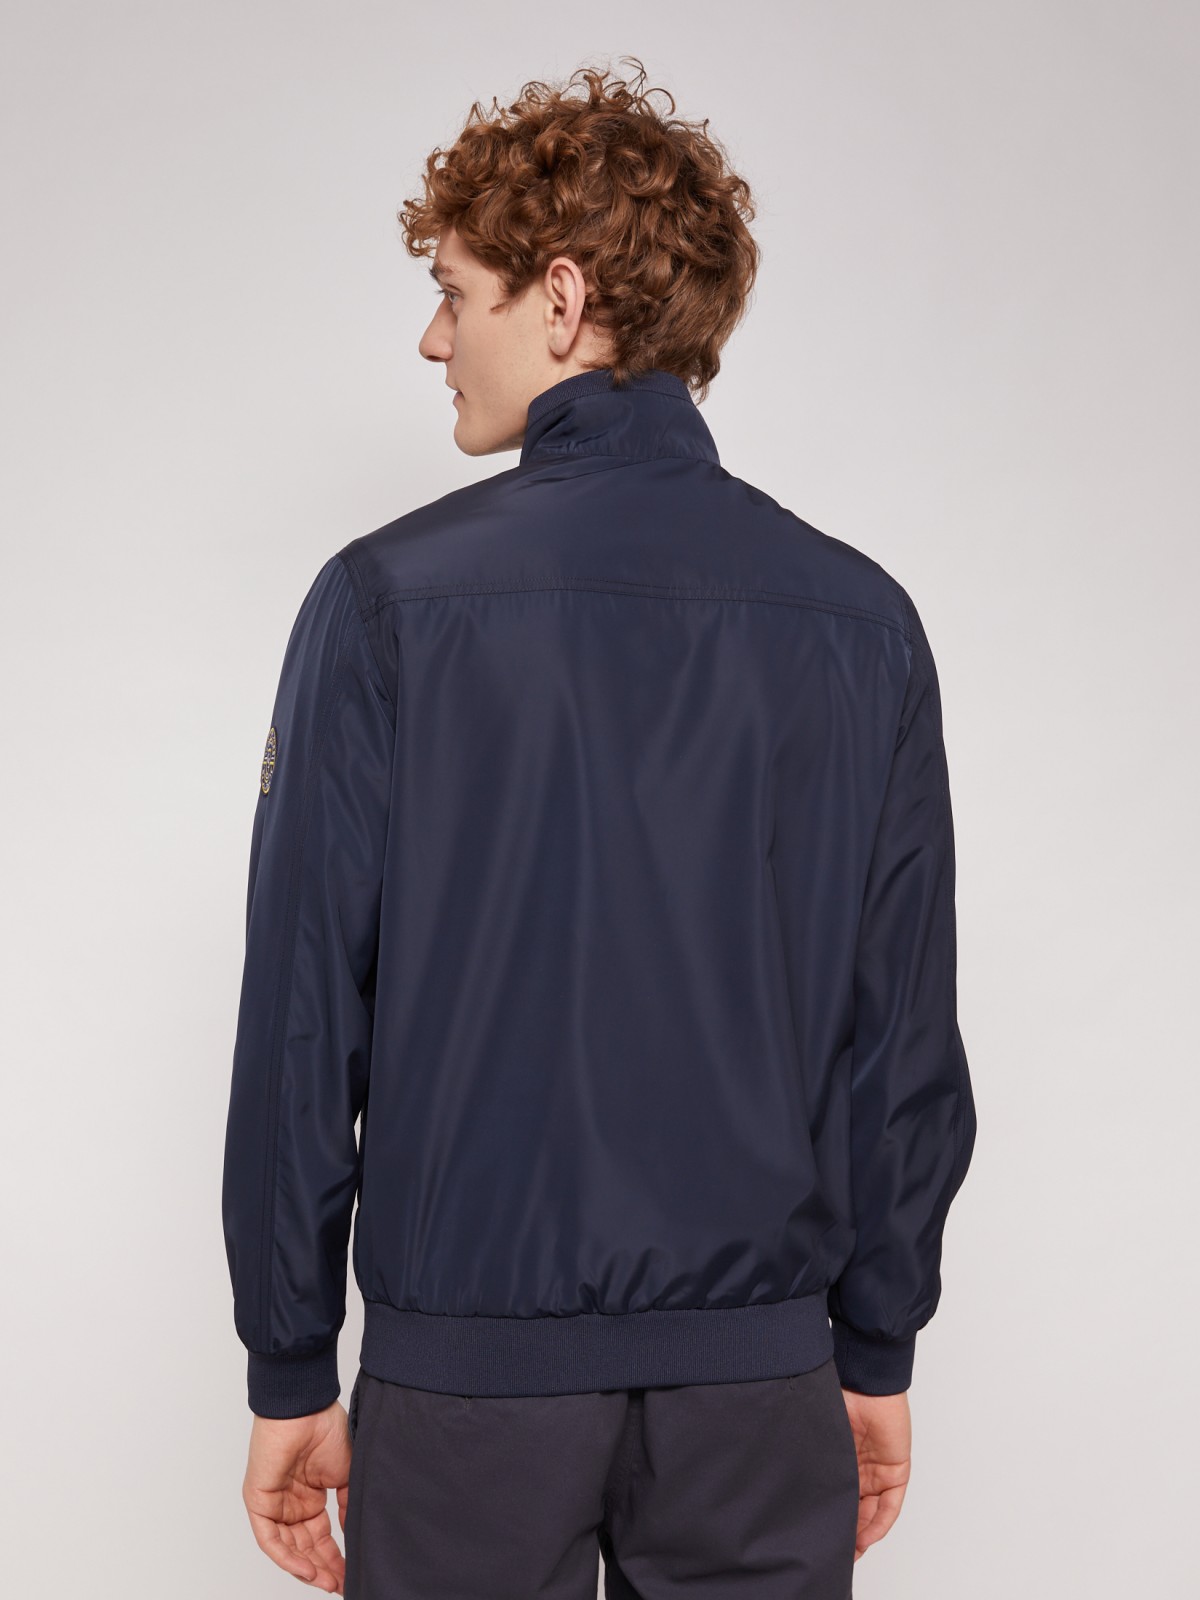 Куртка-ветровка zolla 011215602124, цвет темно-синий, размер M - фото 4